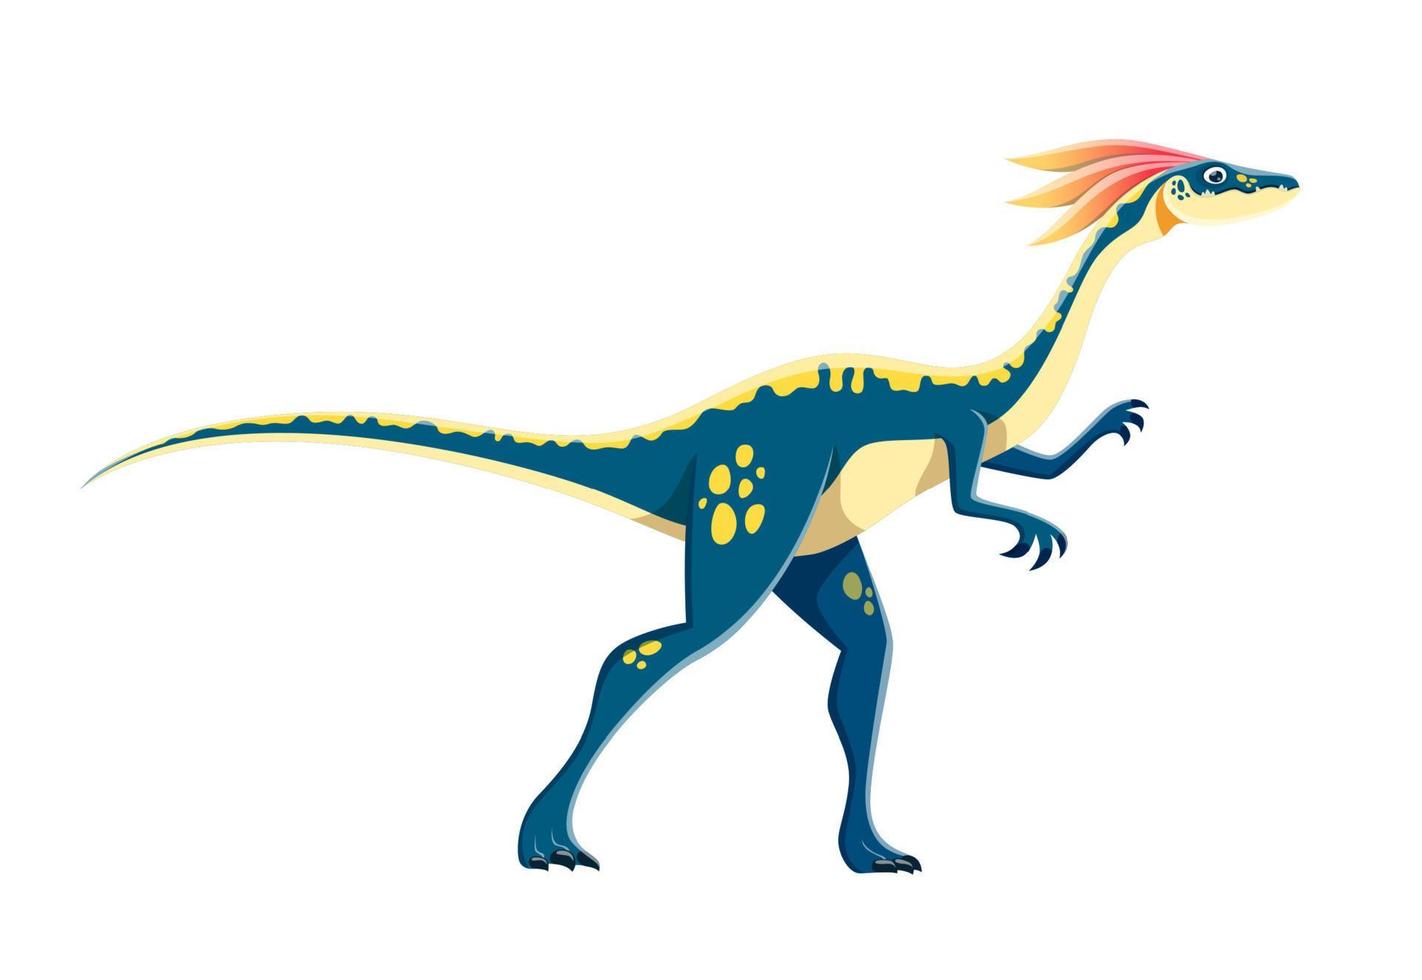 Cartoon Compsognathus dinosaur comical character vector